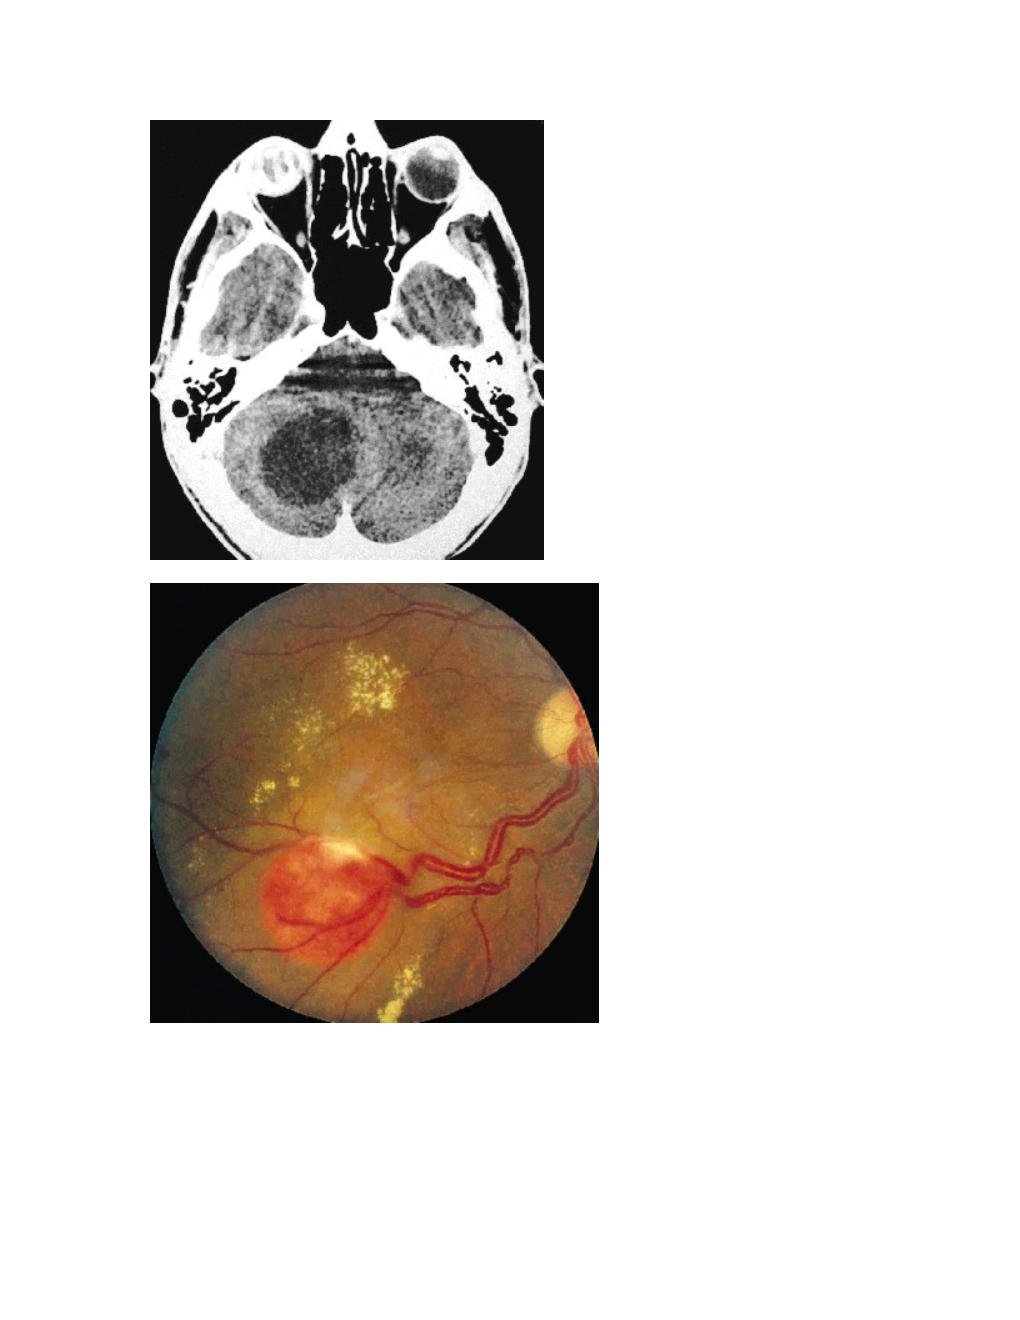 Q: Picture of Cerebellar Cyst Vs Picture of Capillary Hemangioma